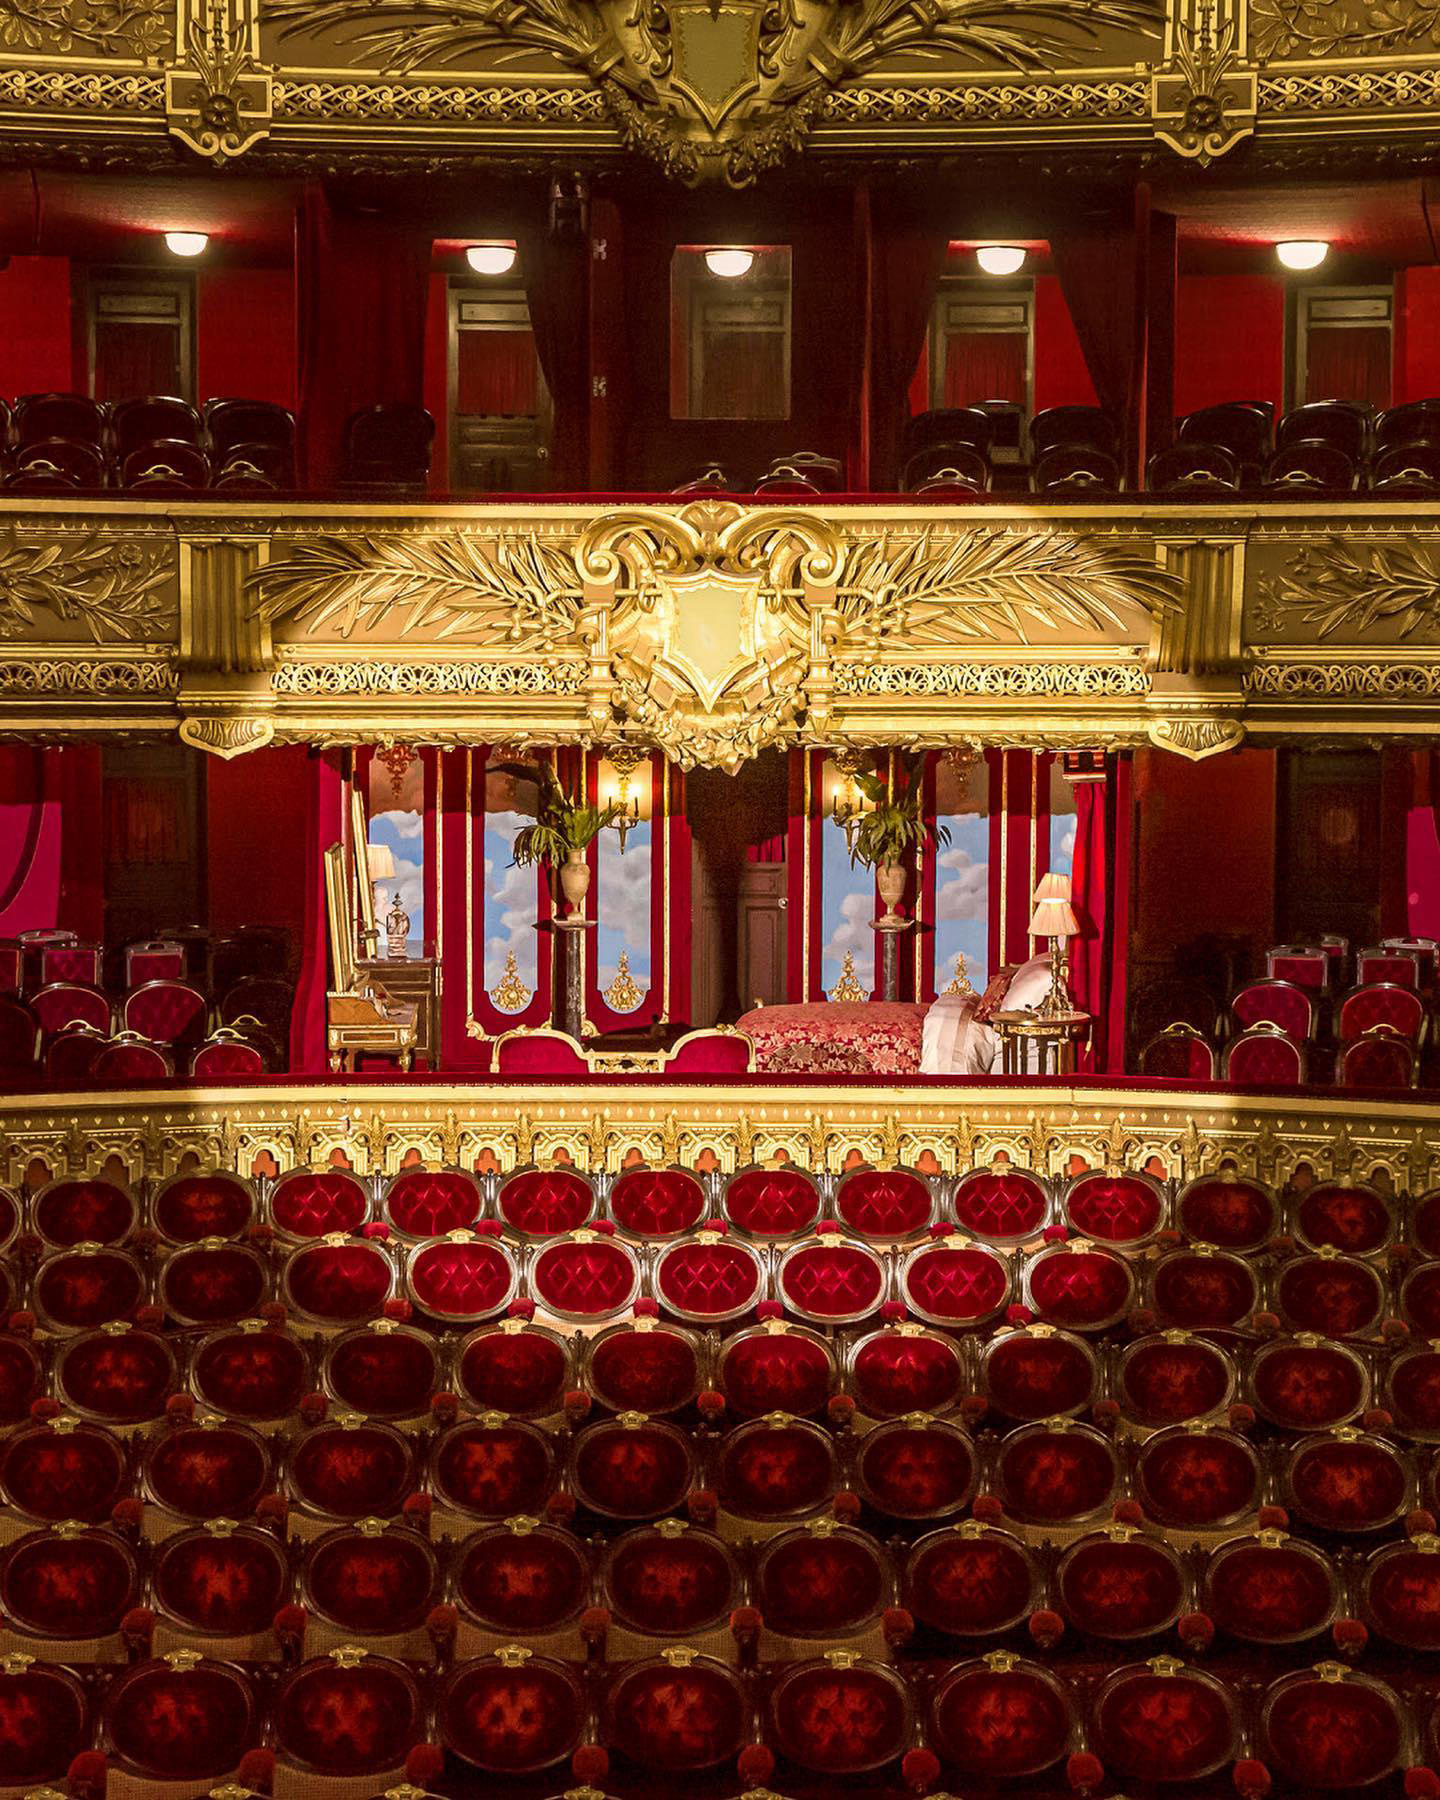 Stay at the Palais Garnier—the Parisian opera house that inspired #andrewlloydwebber’s #phantomopera